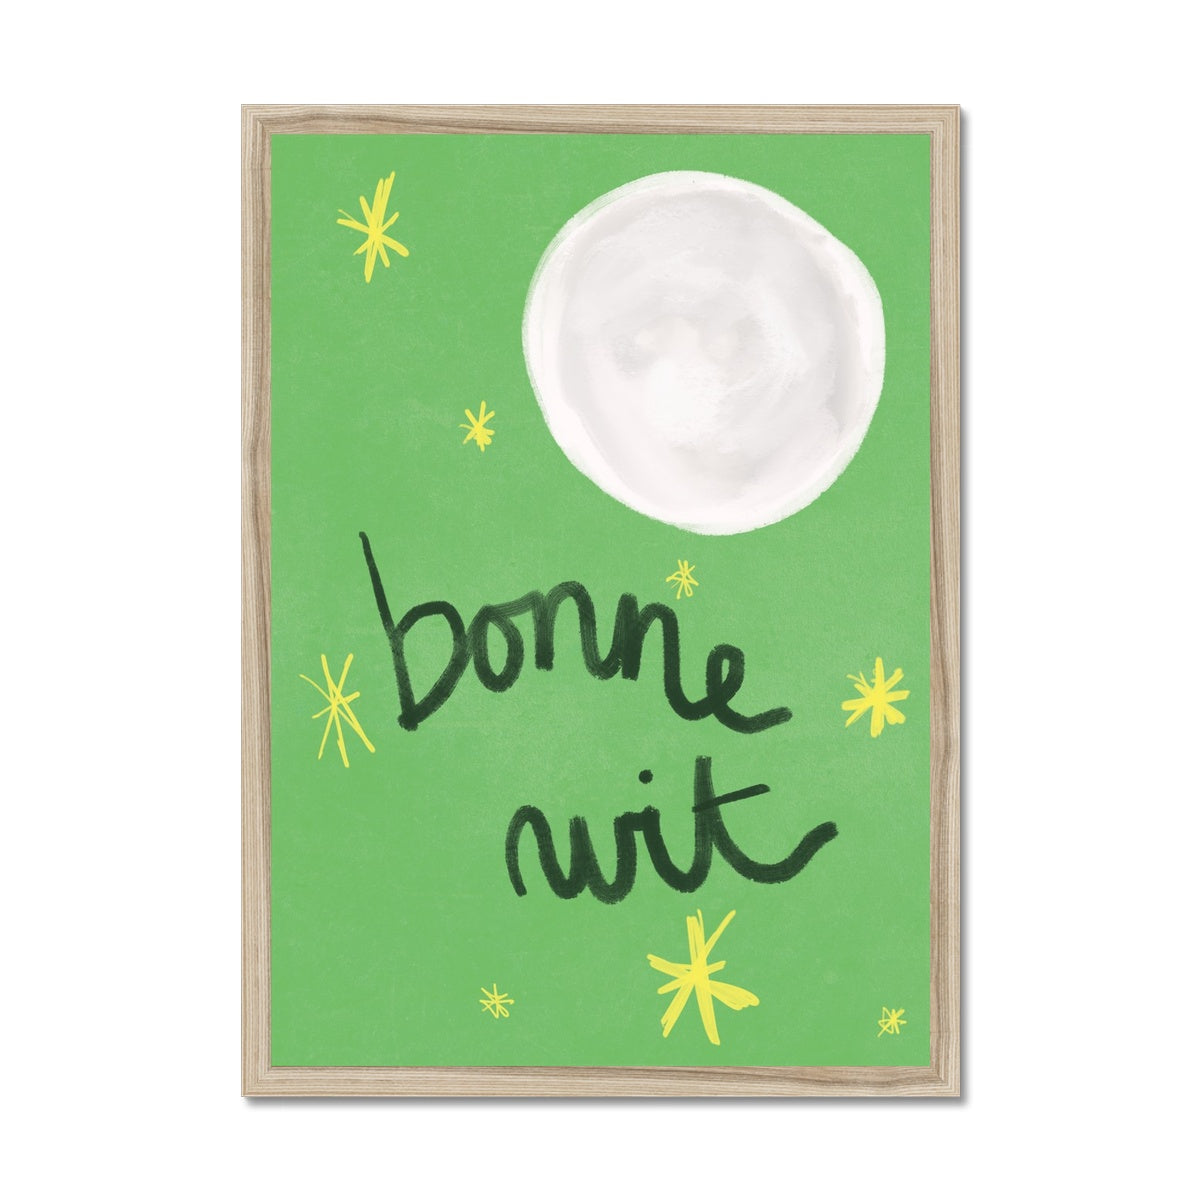 Bonne Nuit Print - Green with Dark Green Framed Print